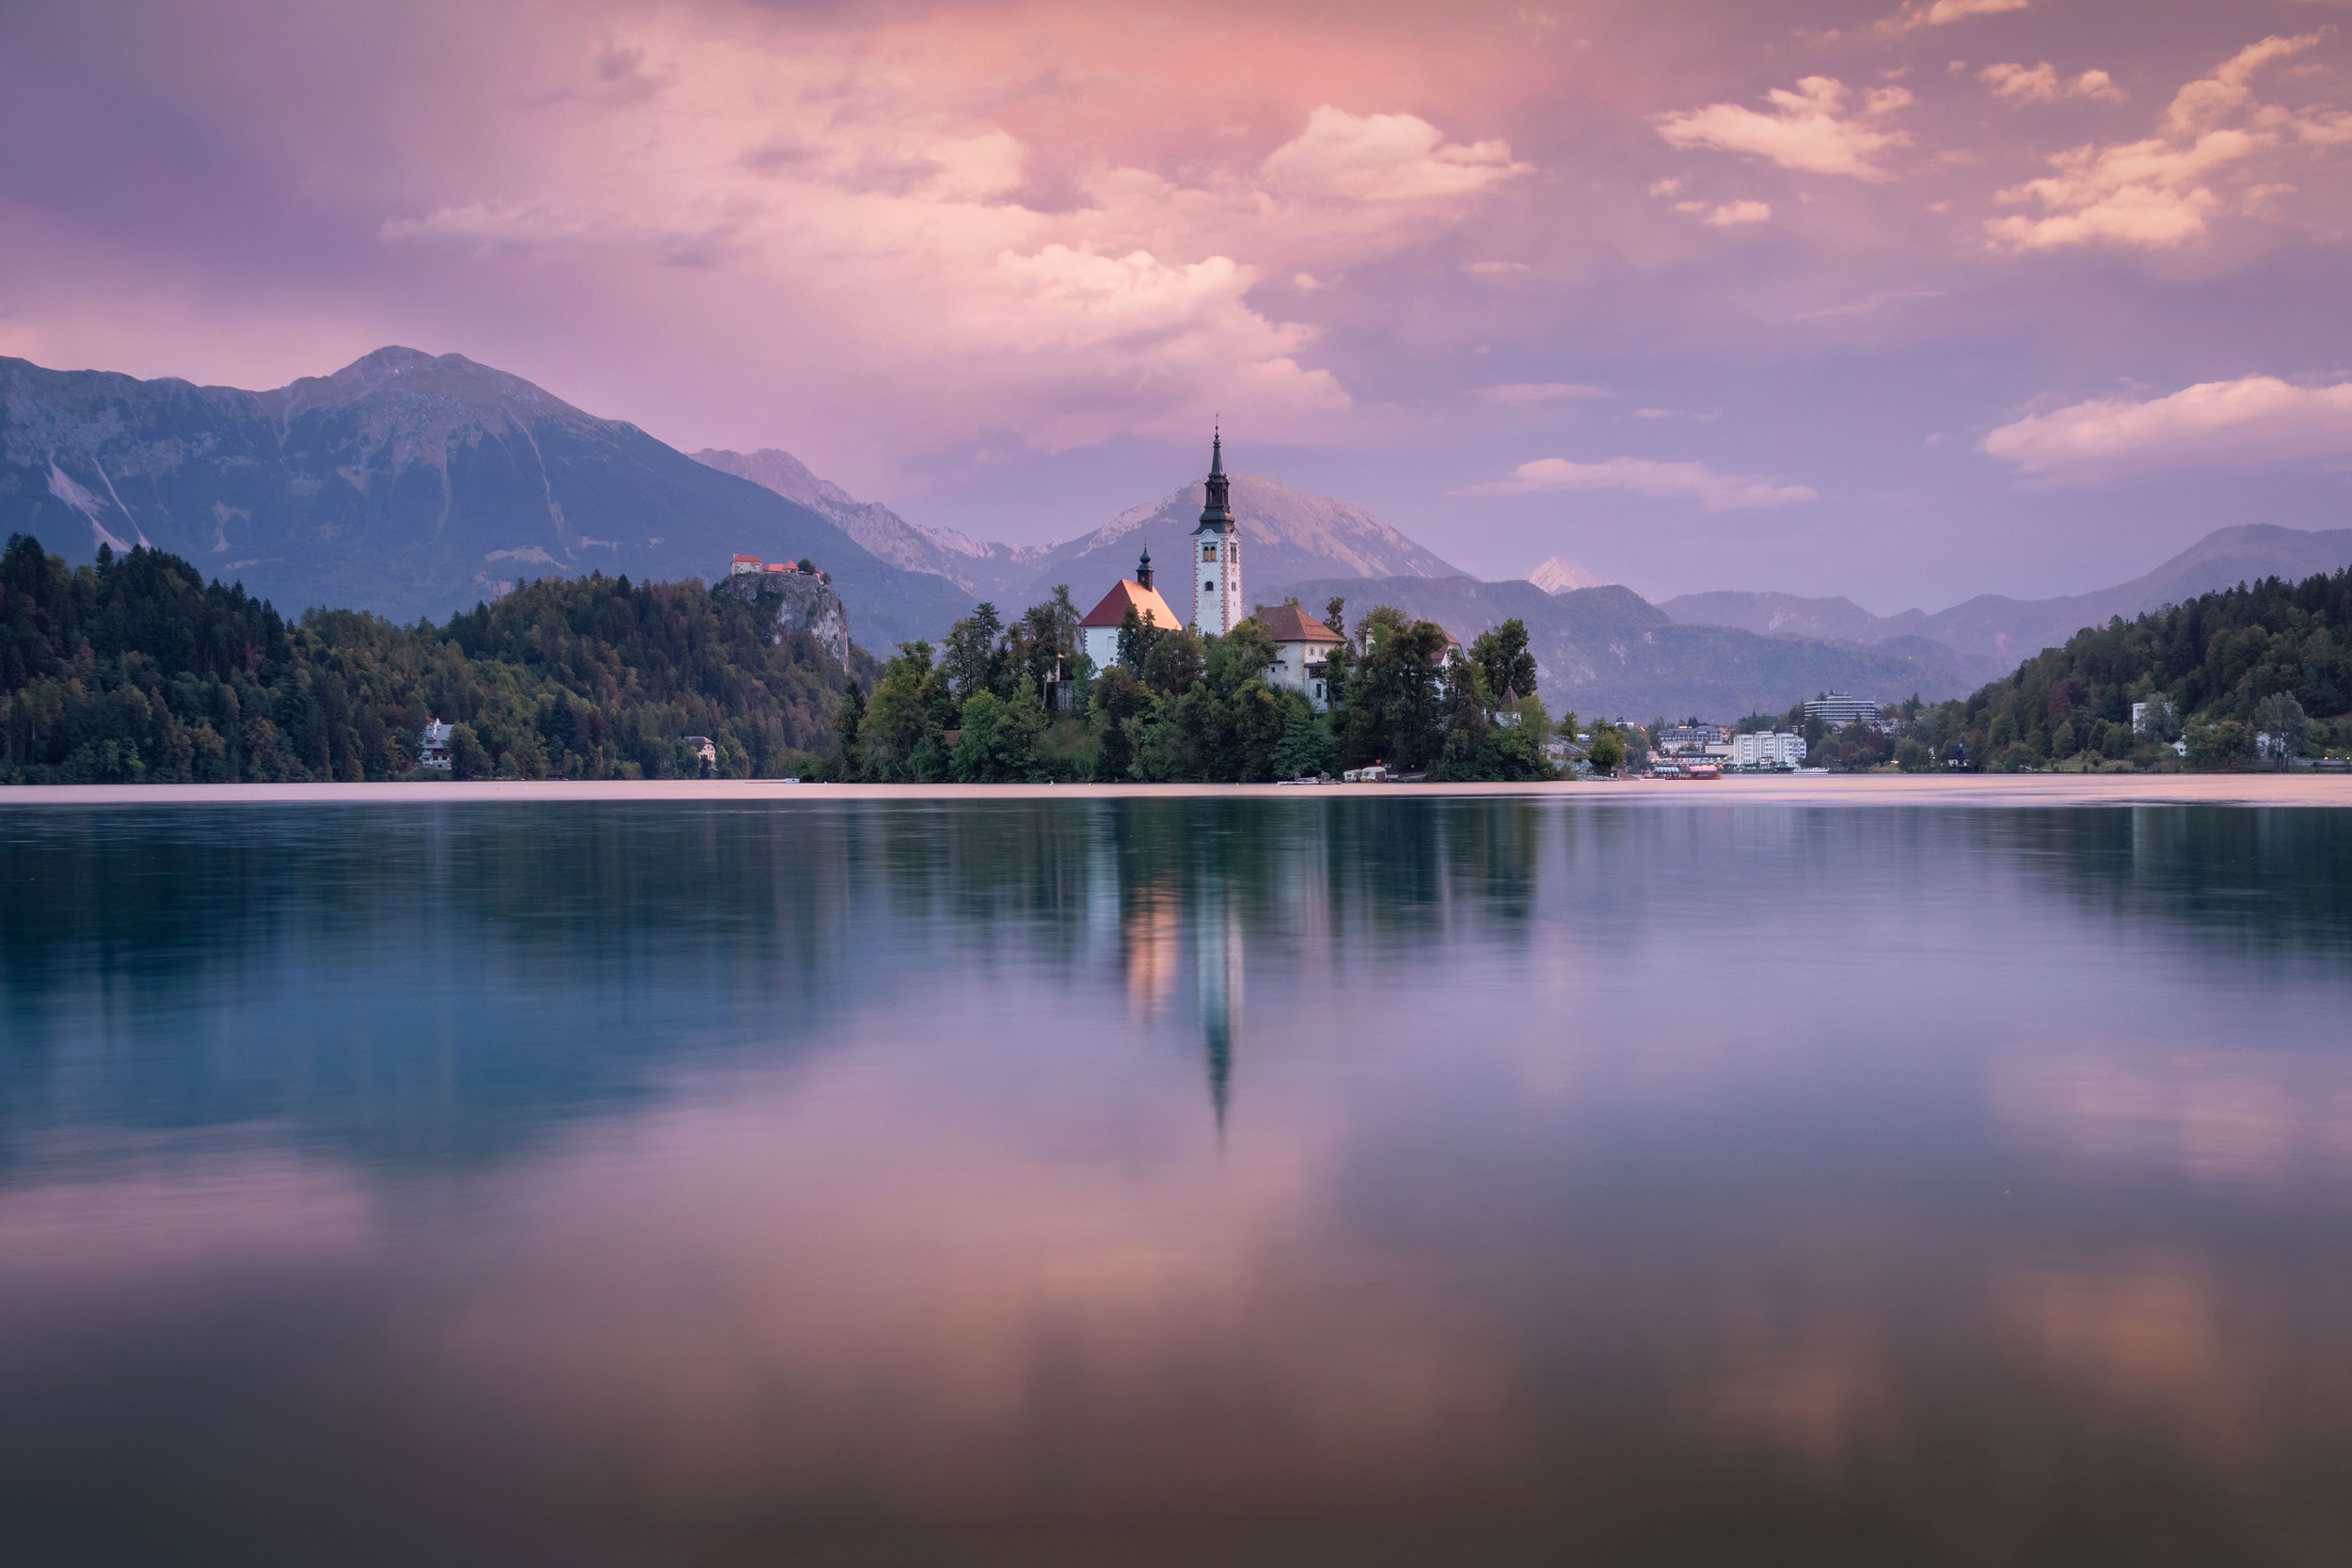 Magical autumn landscape with the island on Lake Bled (Blejsko j